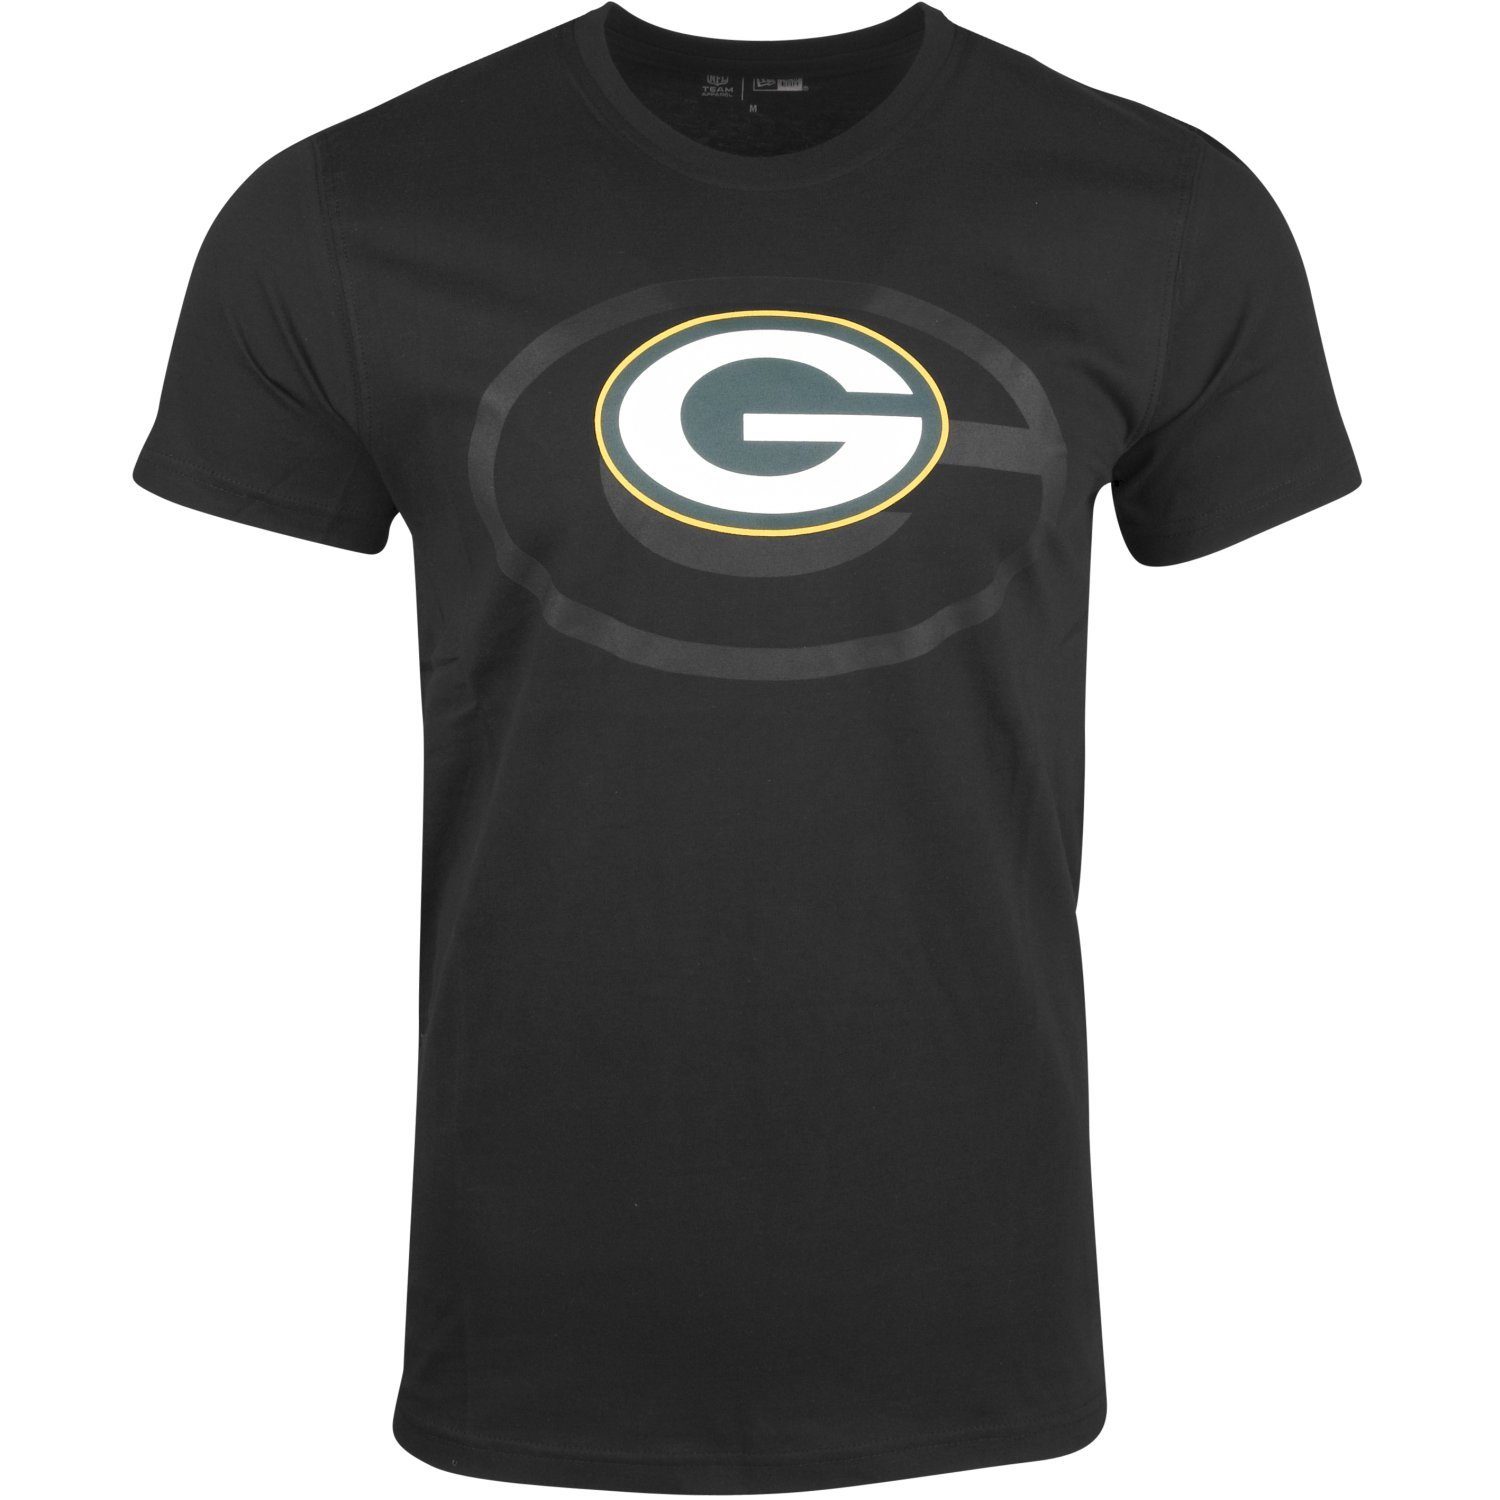 Print-Shirt New Packers Era Bay 2.0 Green NFL